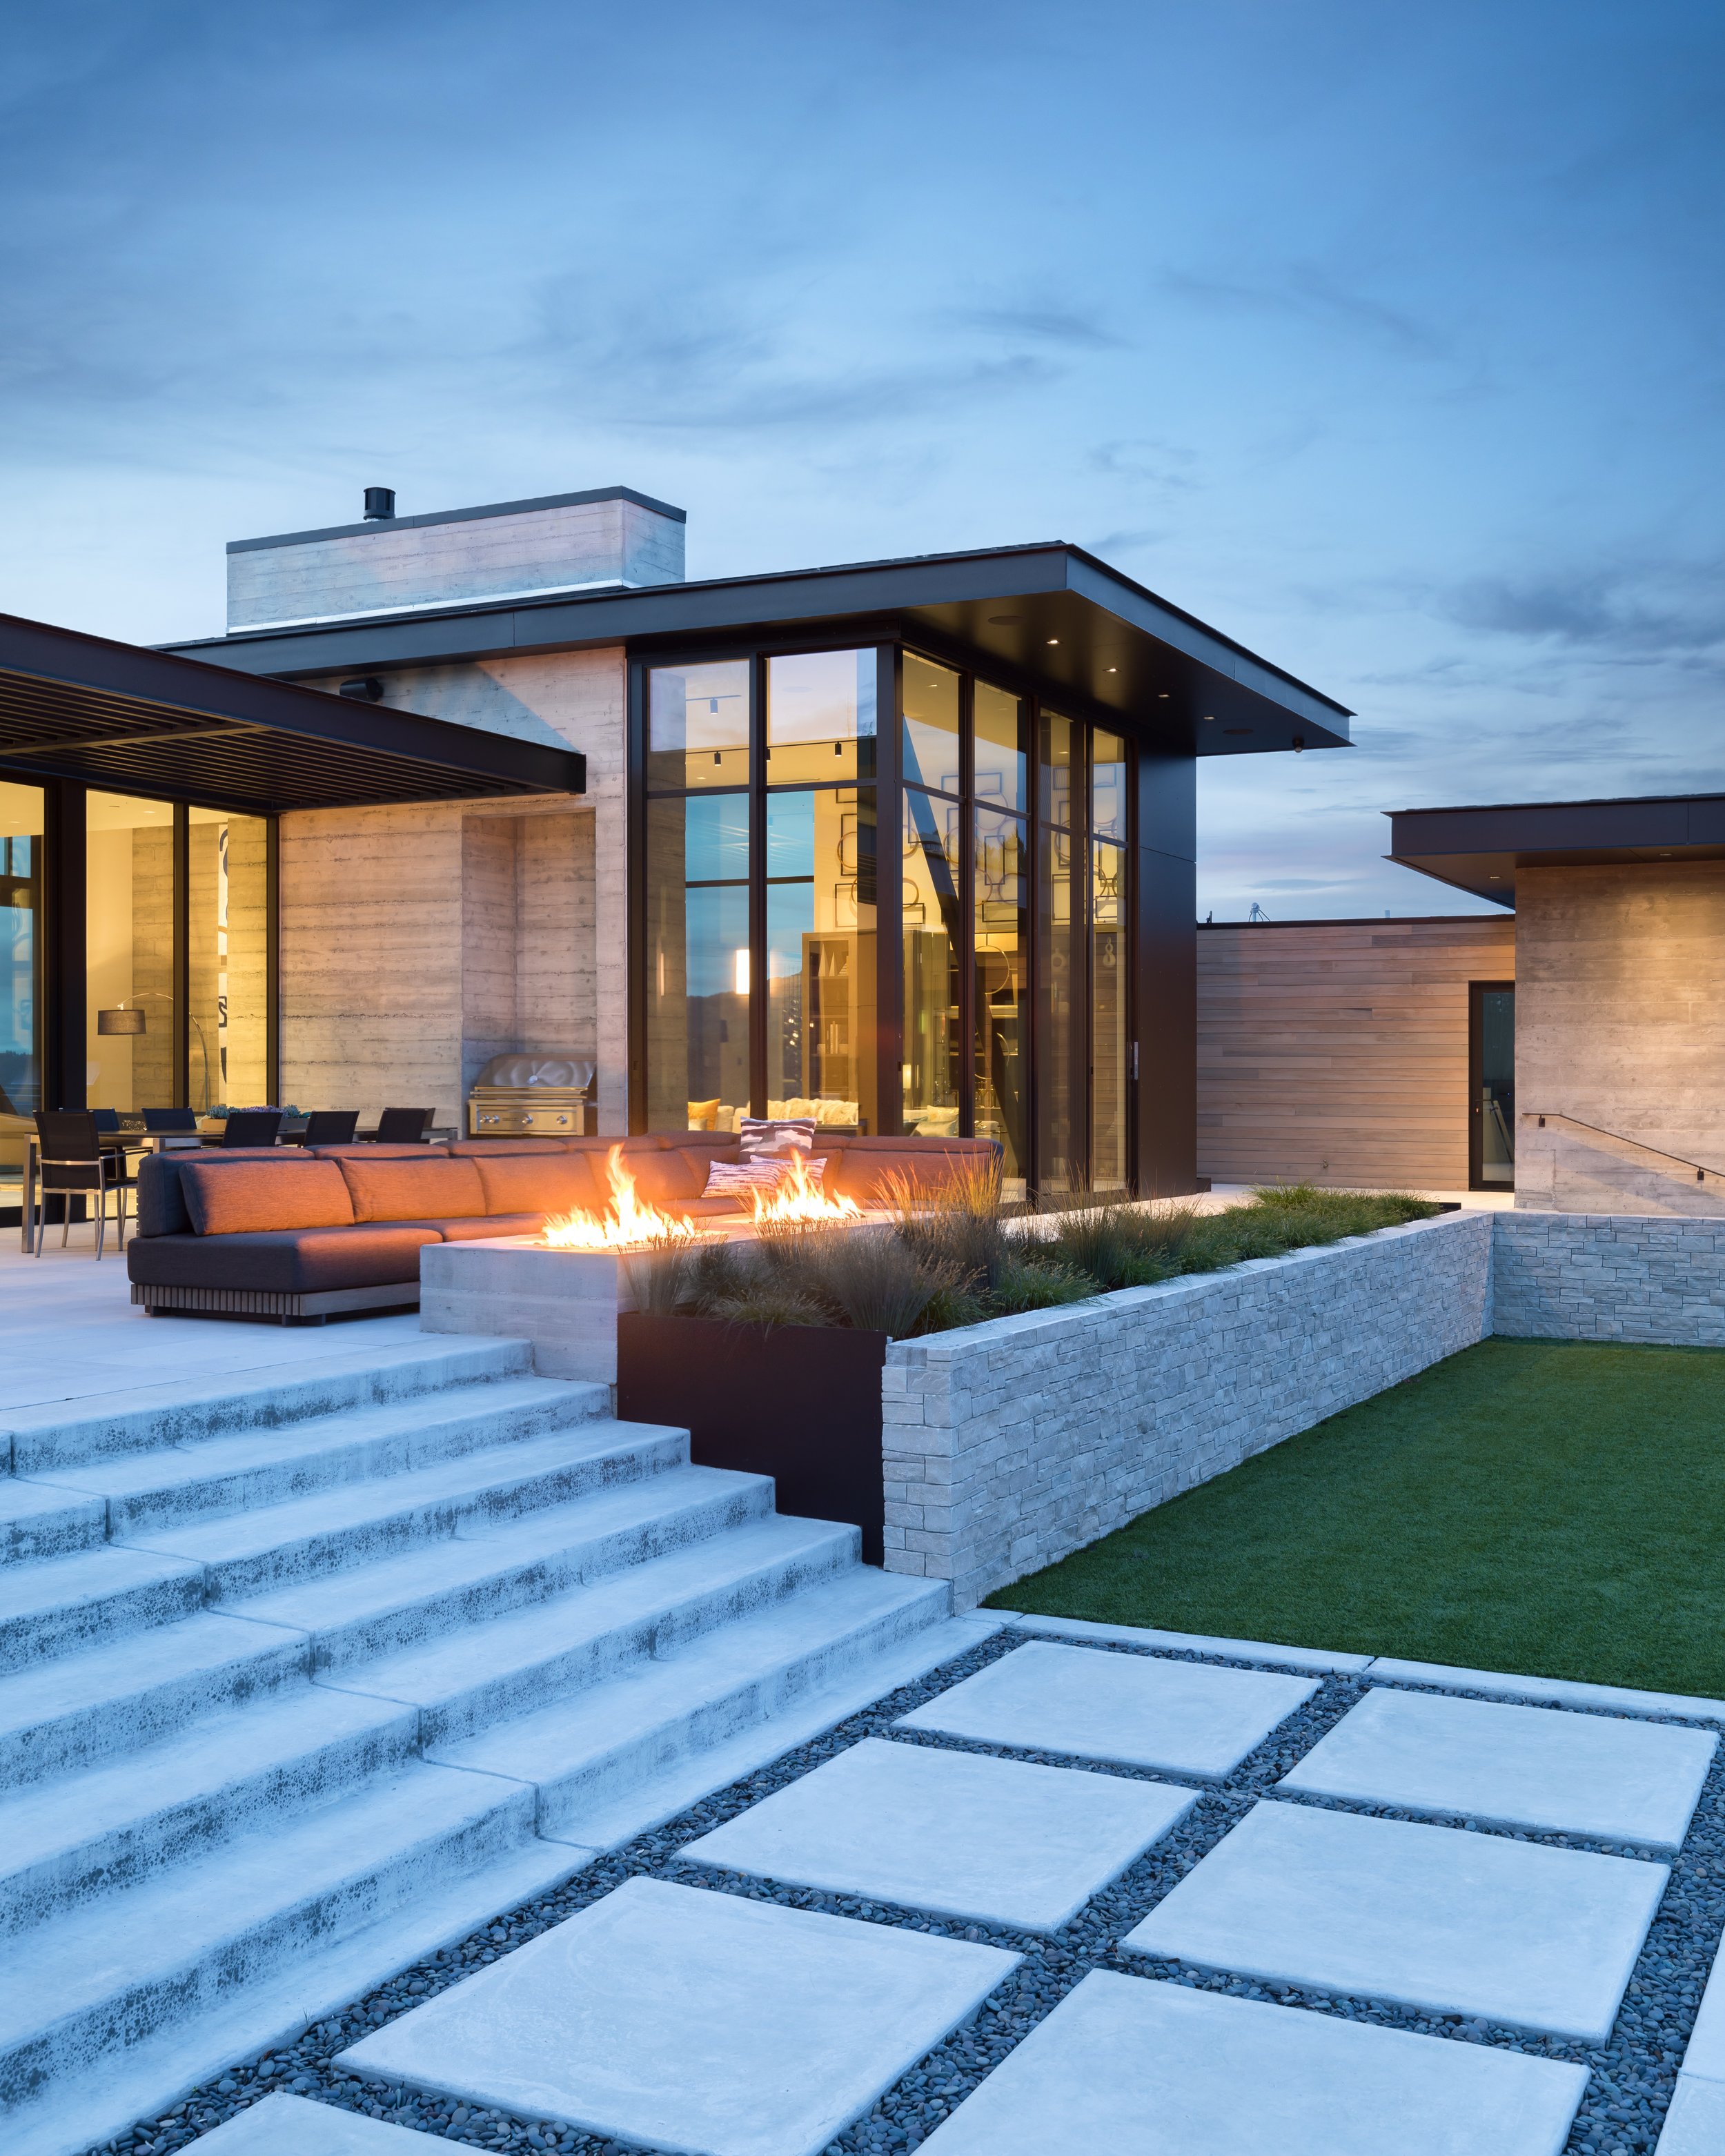 Sky House, Glen Ellen, CA - Eric McGinty, GC / Zimmerman + Associates / Sean Bailey Design / Fleetwood Windows & Doors